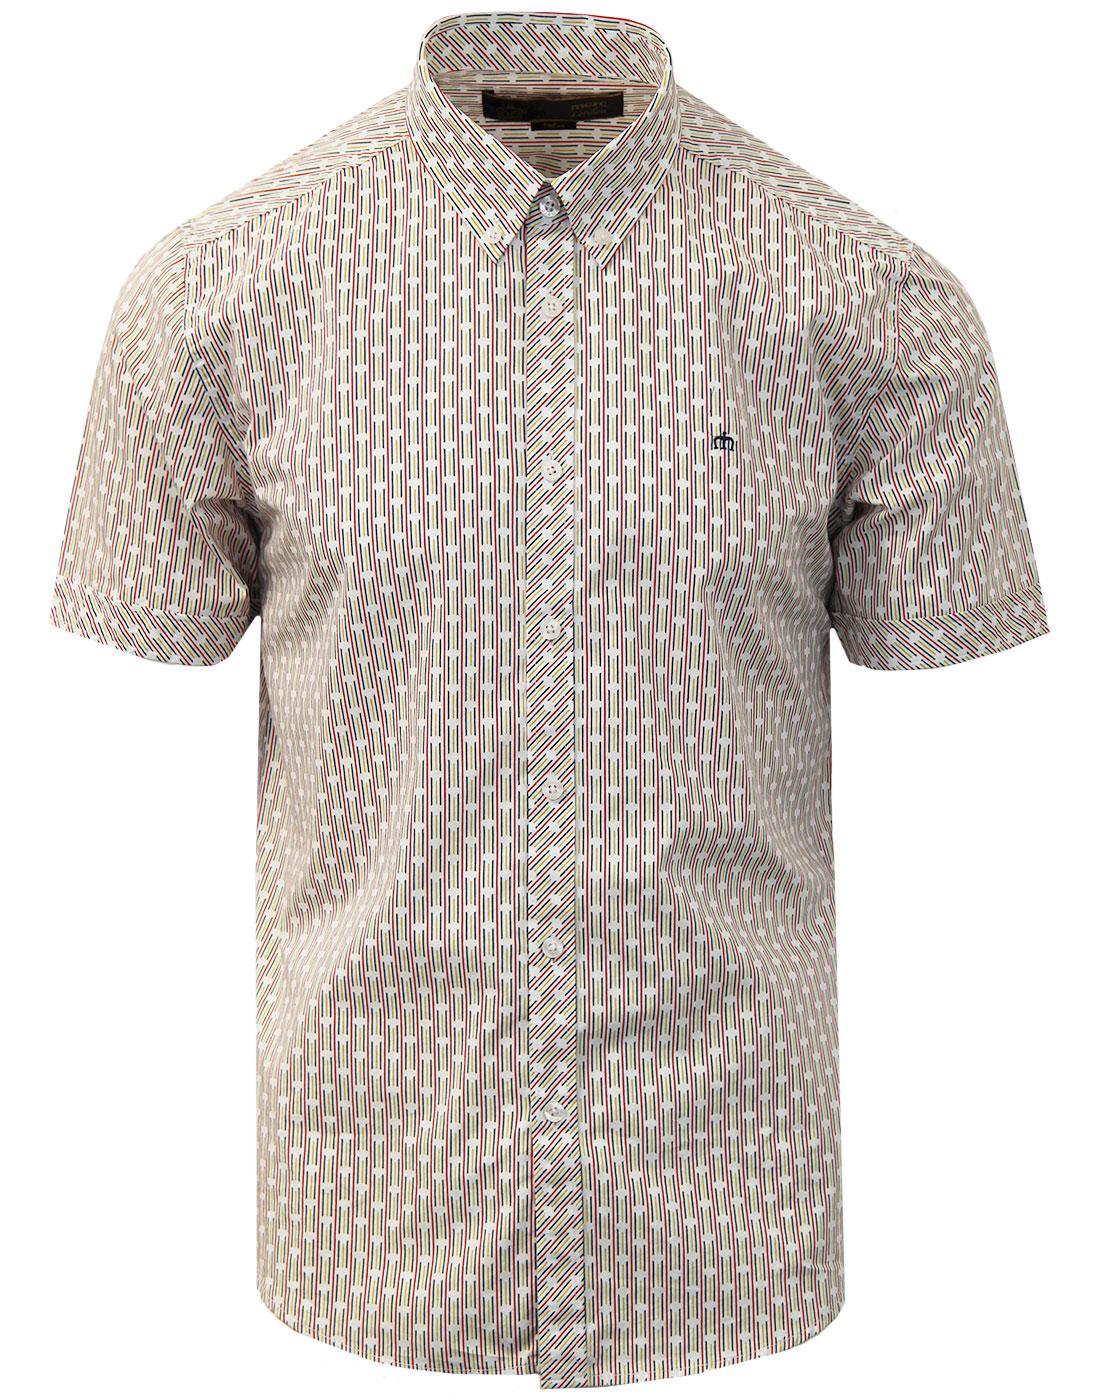 Barrack MERC 60s Mod Polka Dot Stripe Shirt WHITE